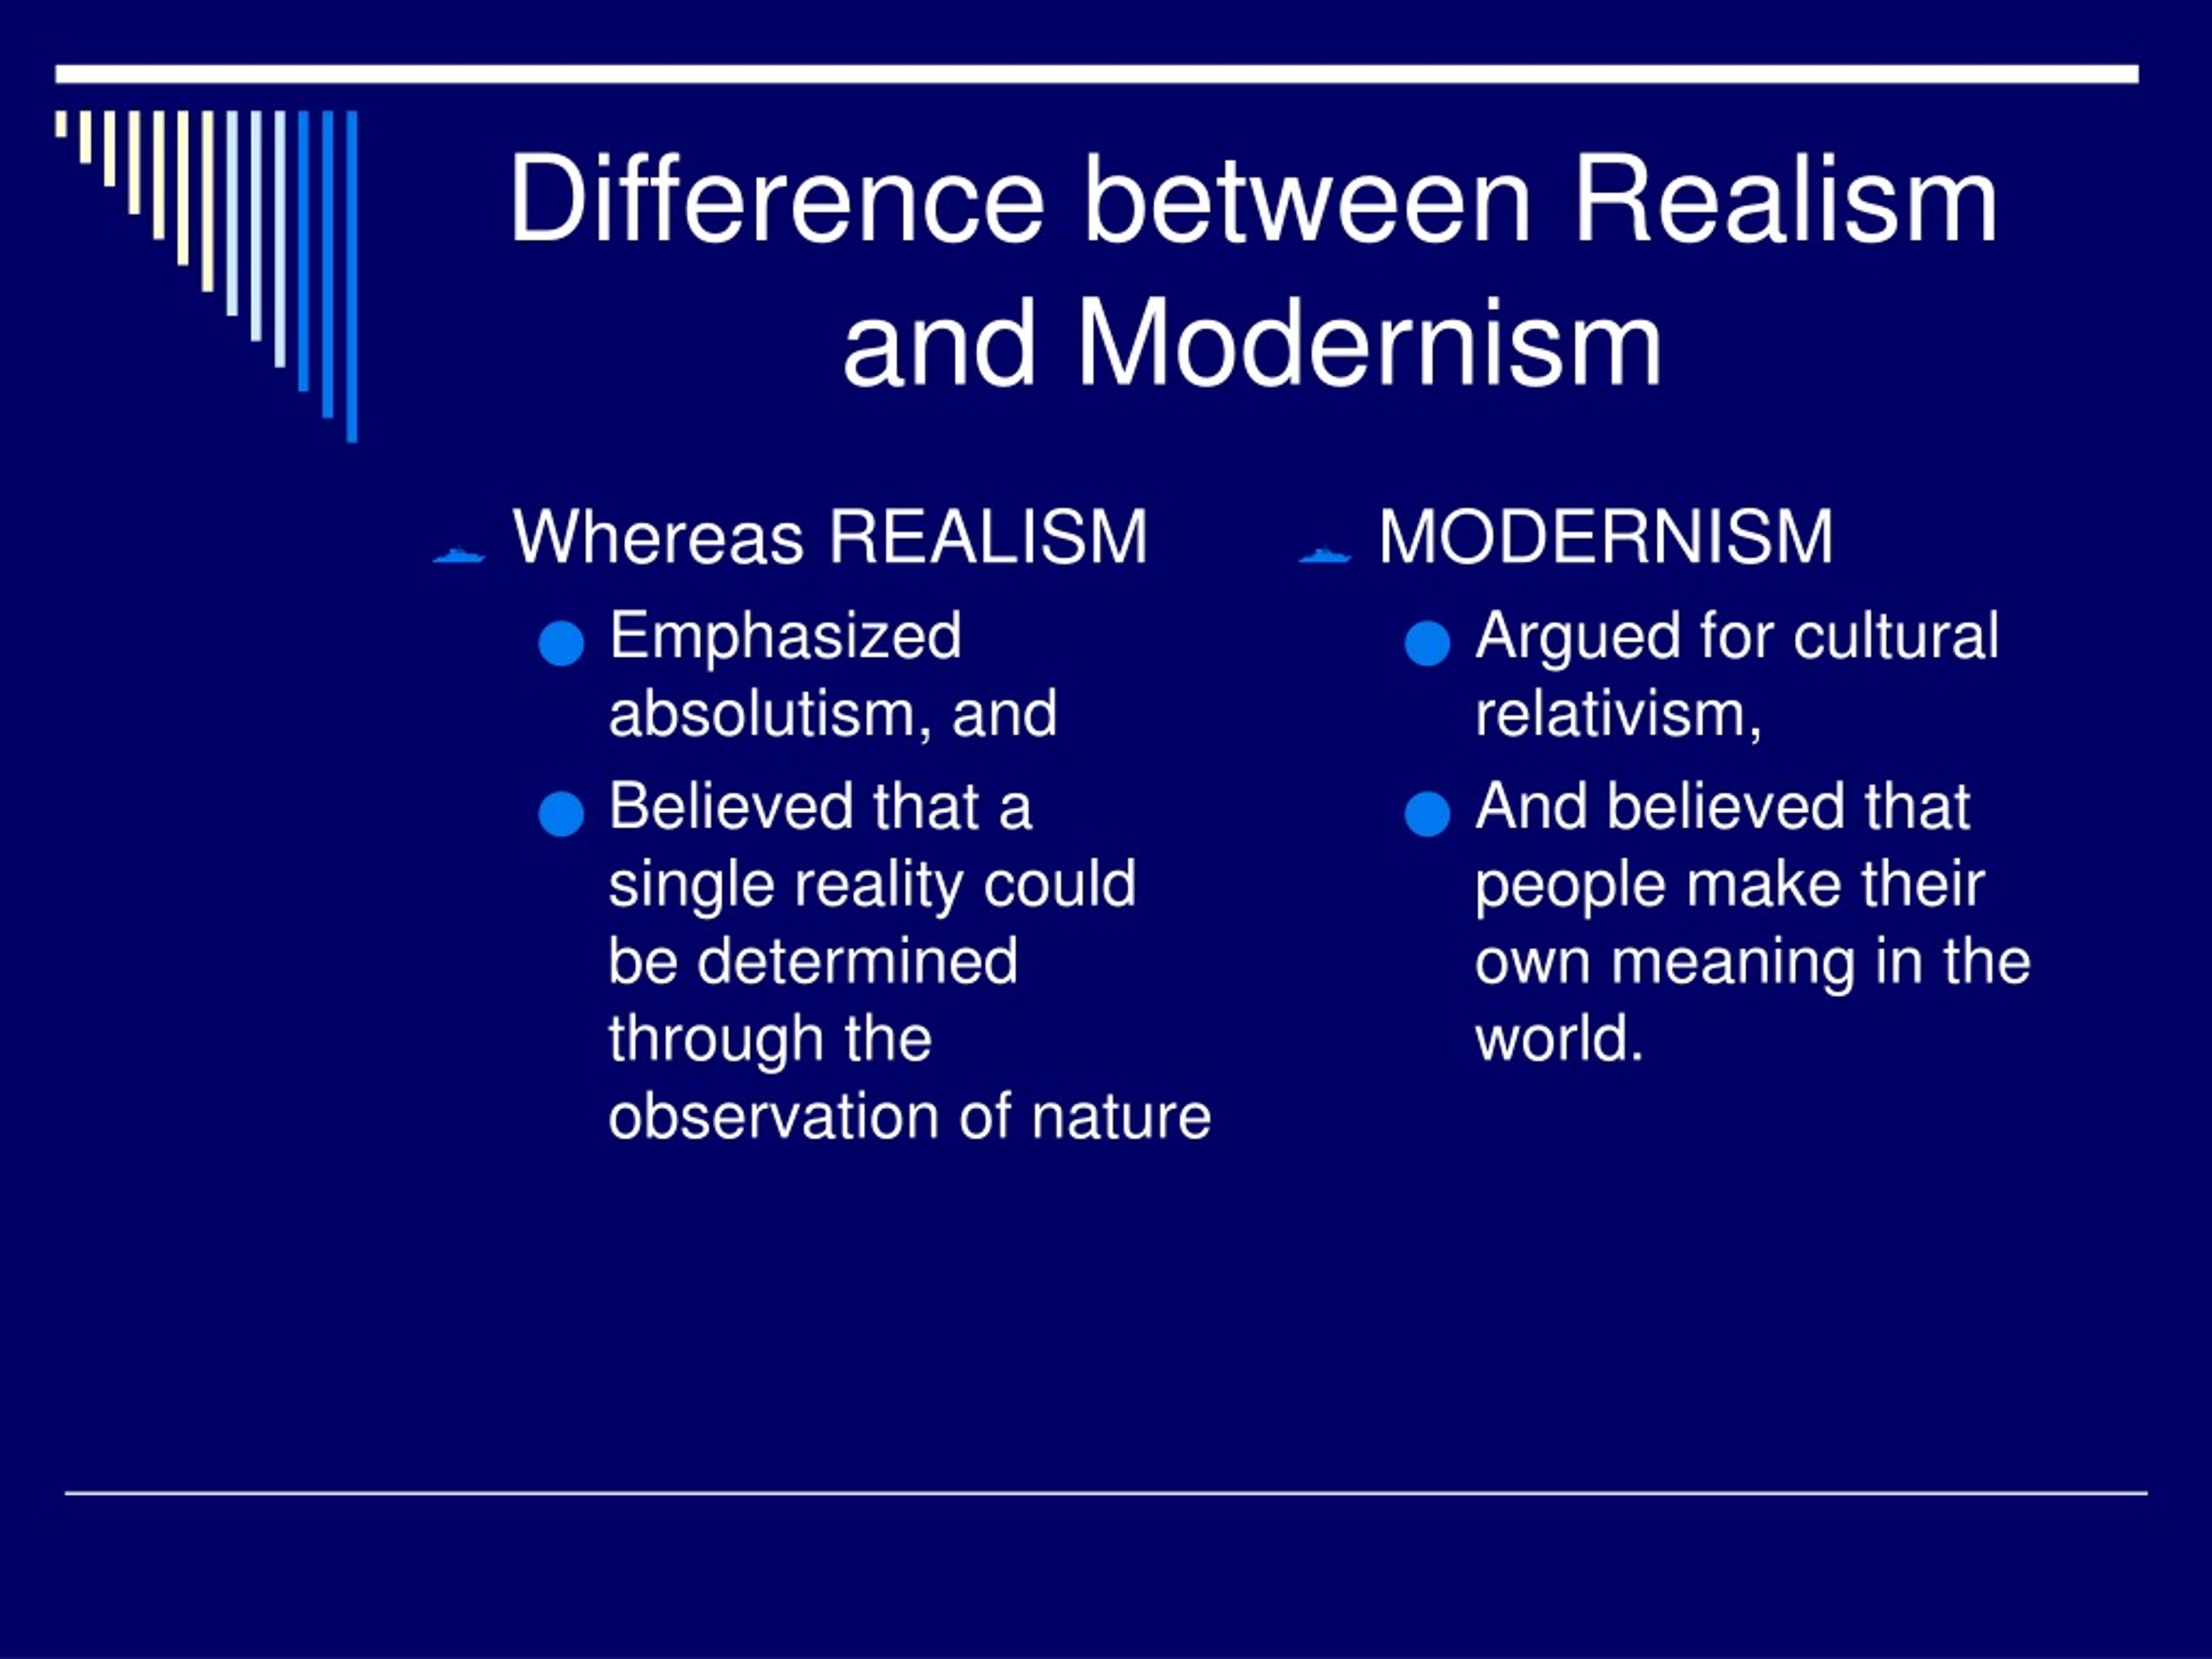 realism vs modernism essay